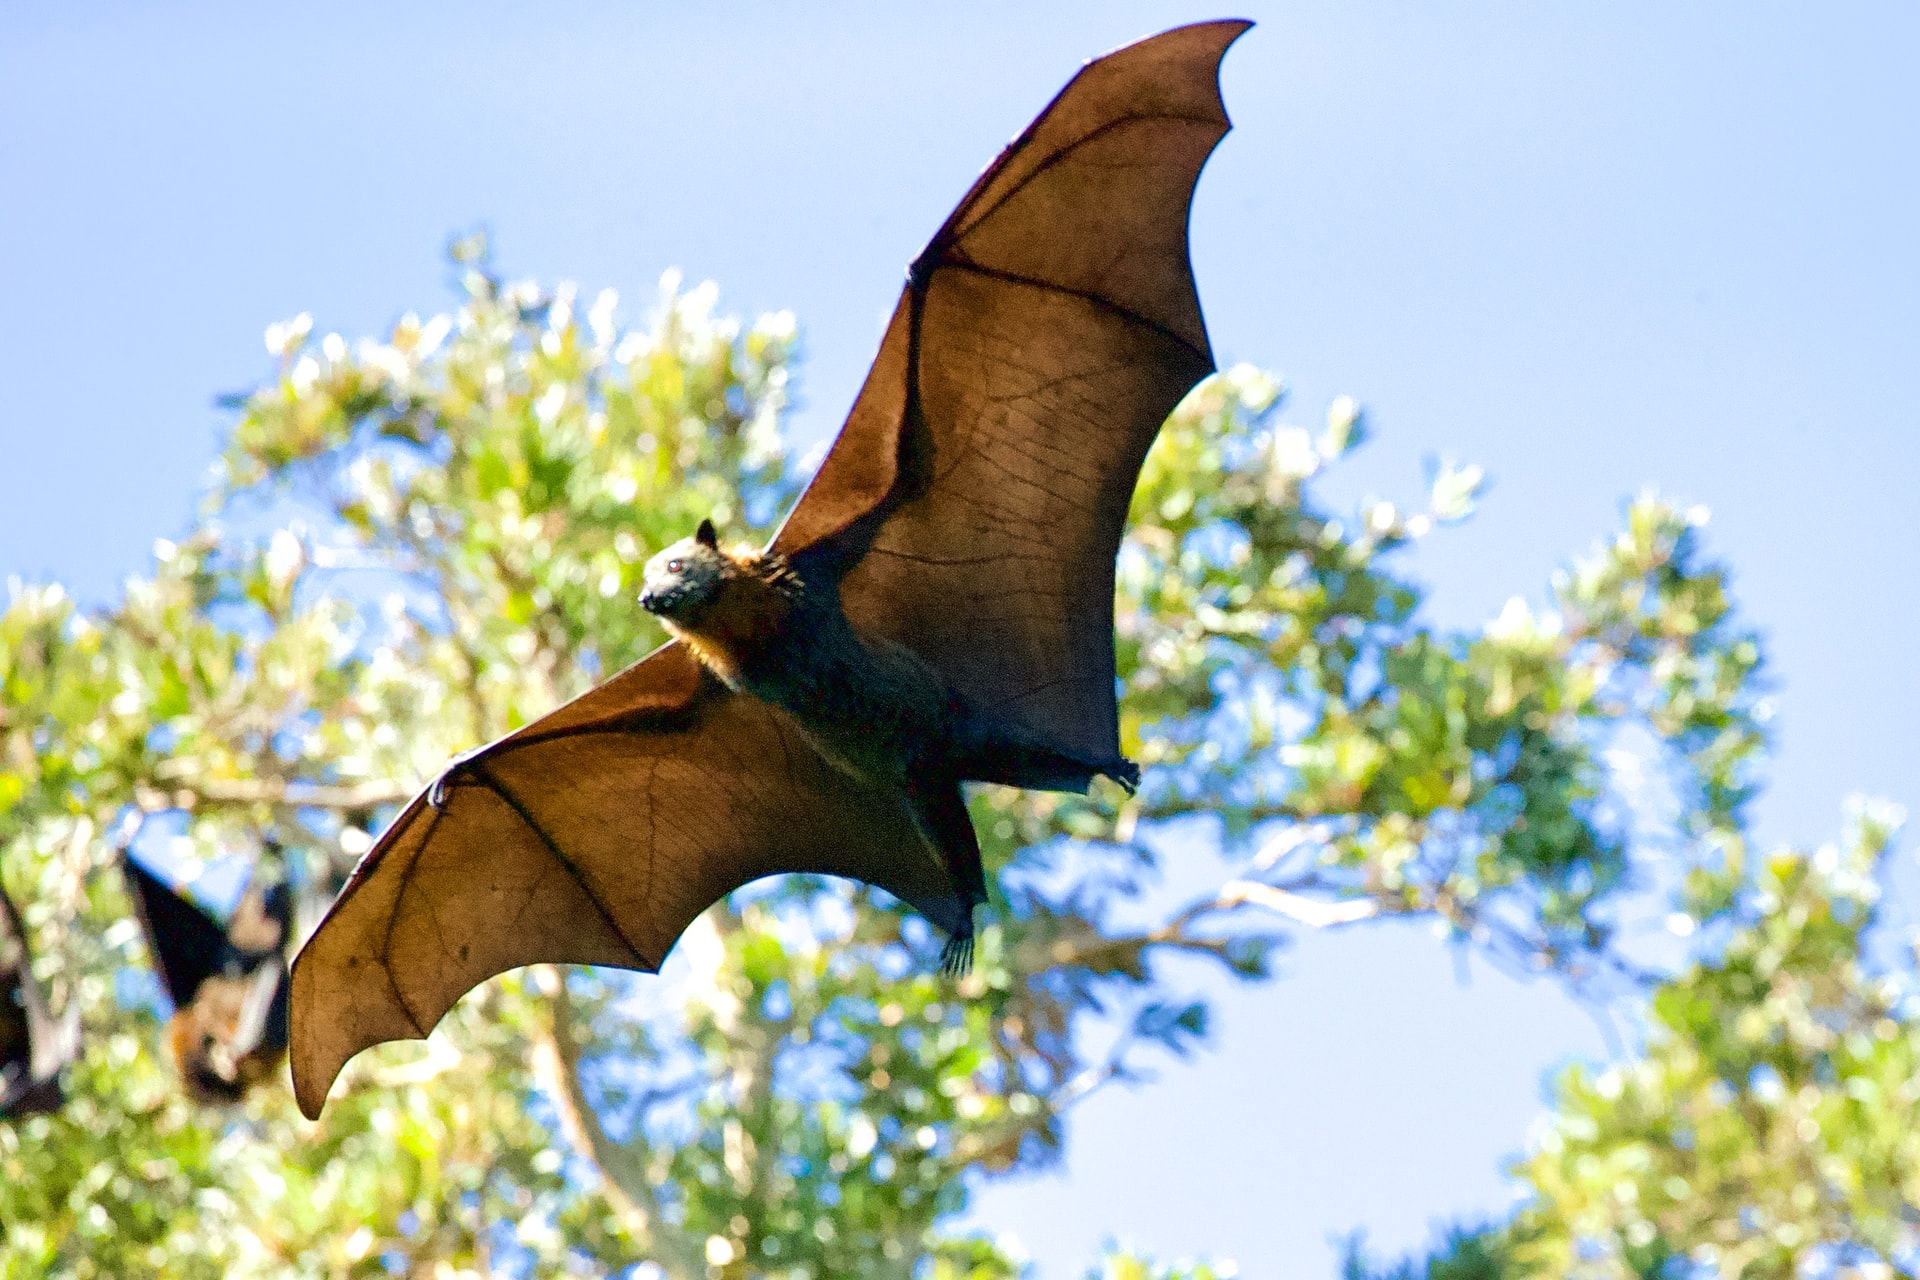 Balayang the Bat